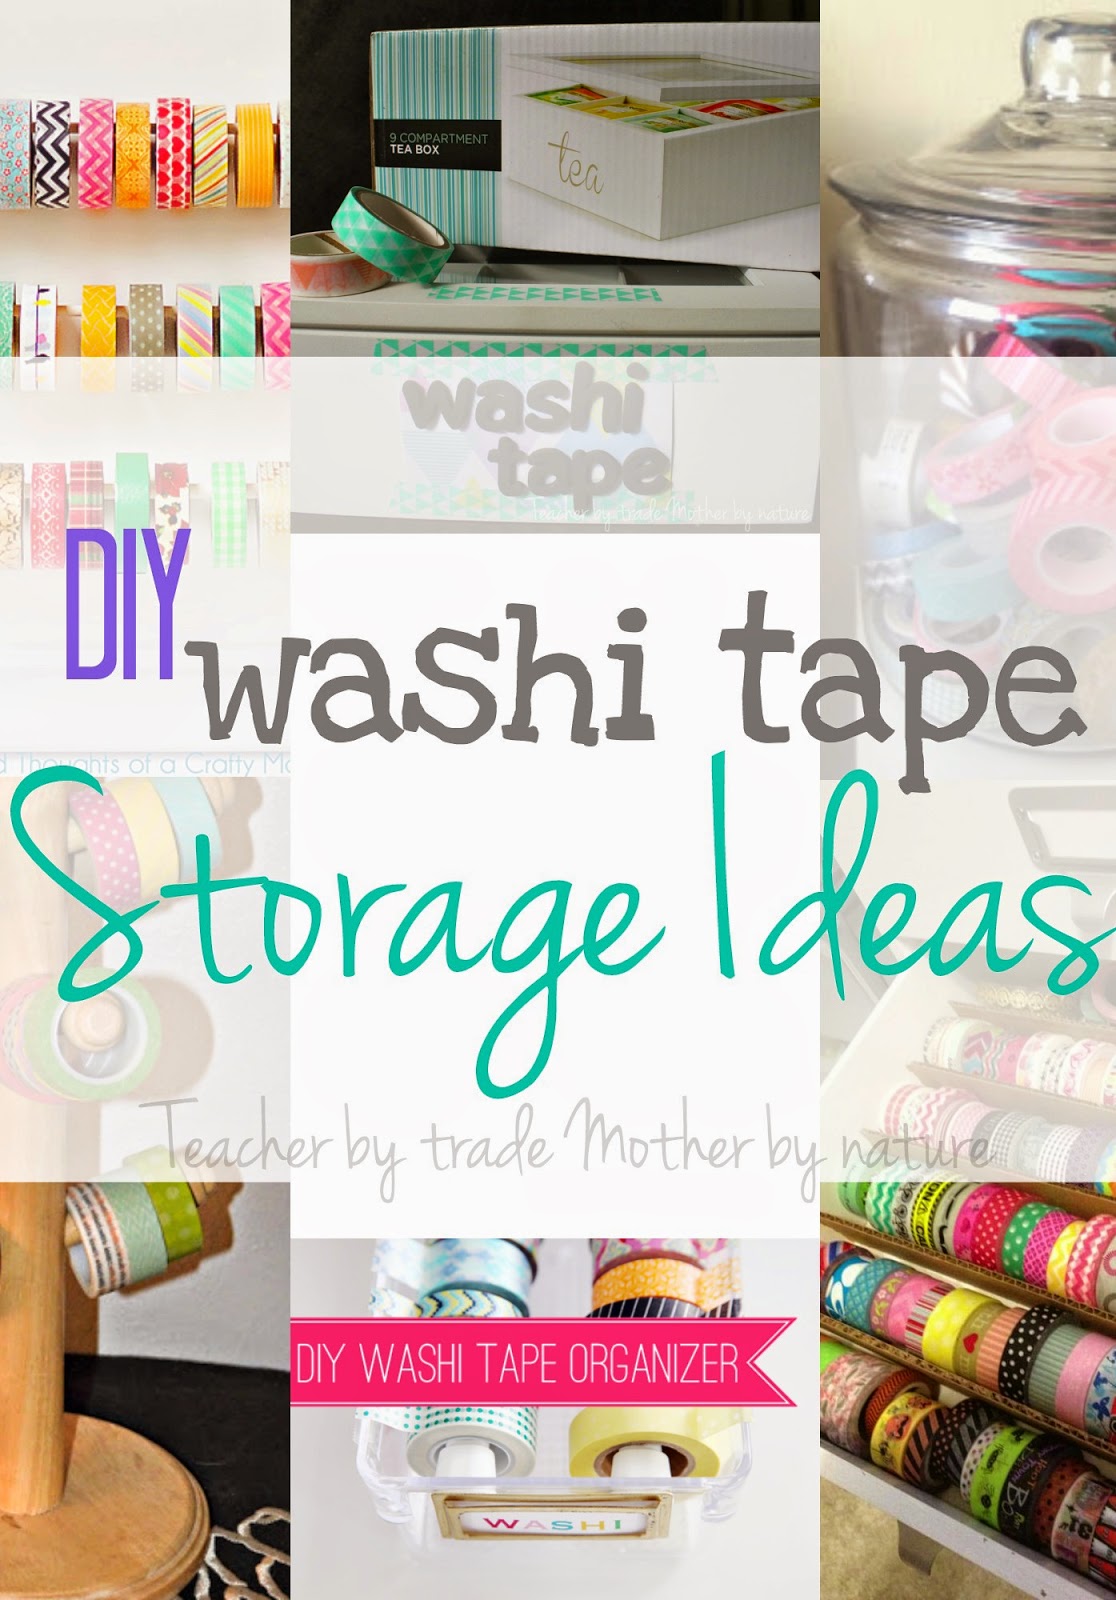 How-To: Washi Tape Holder - Make